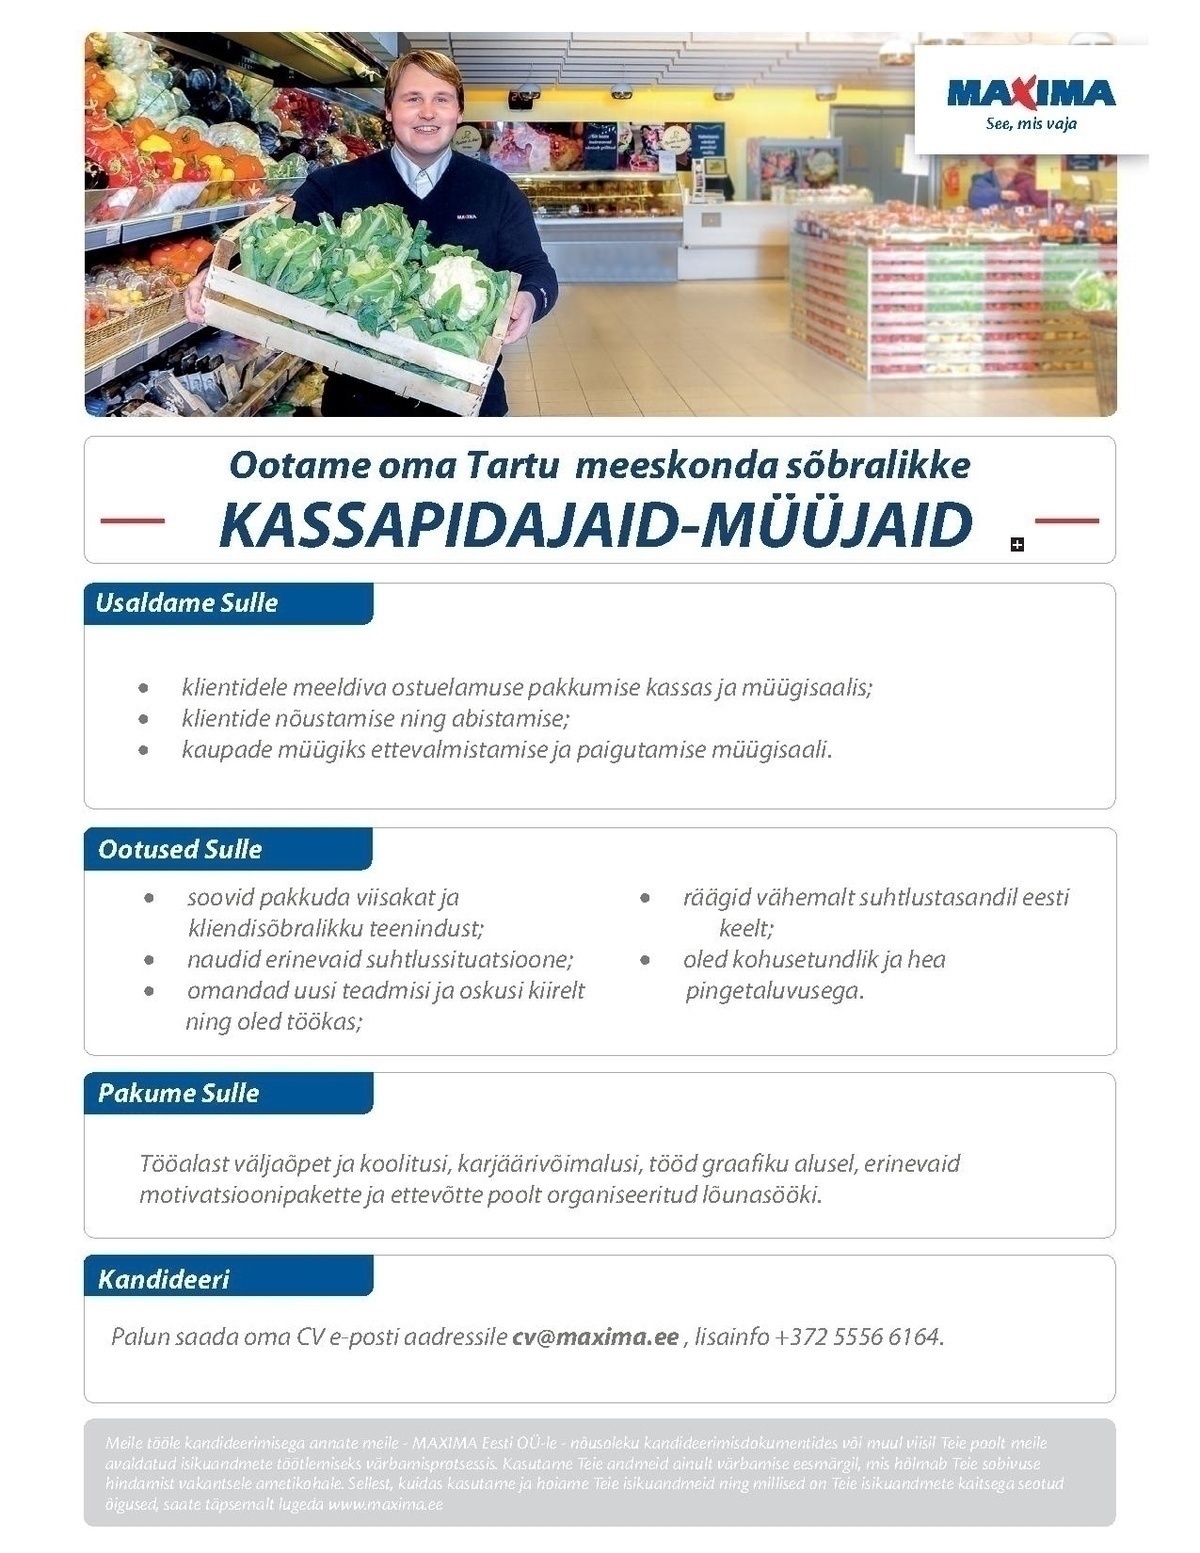 Maxima Eesti OÜ Kassapidaja-müüja Narva Maximas (Tiimani 20)